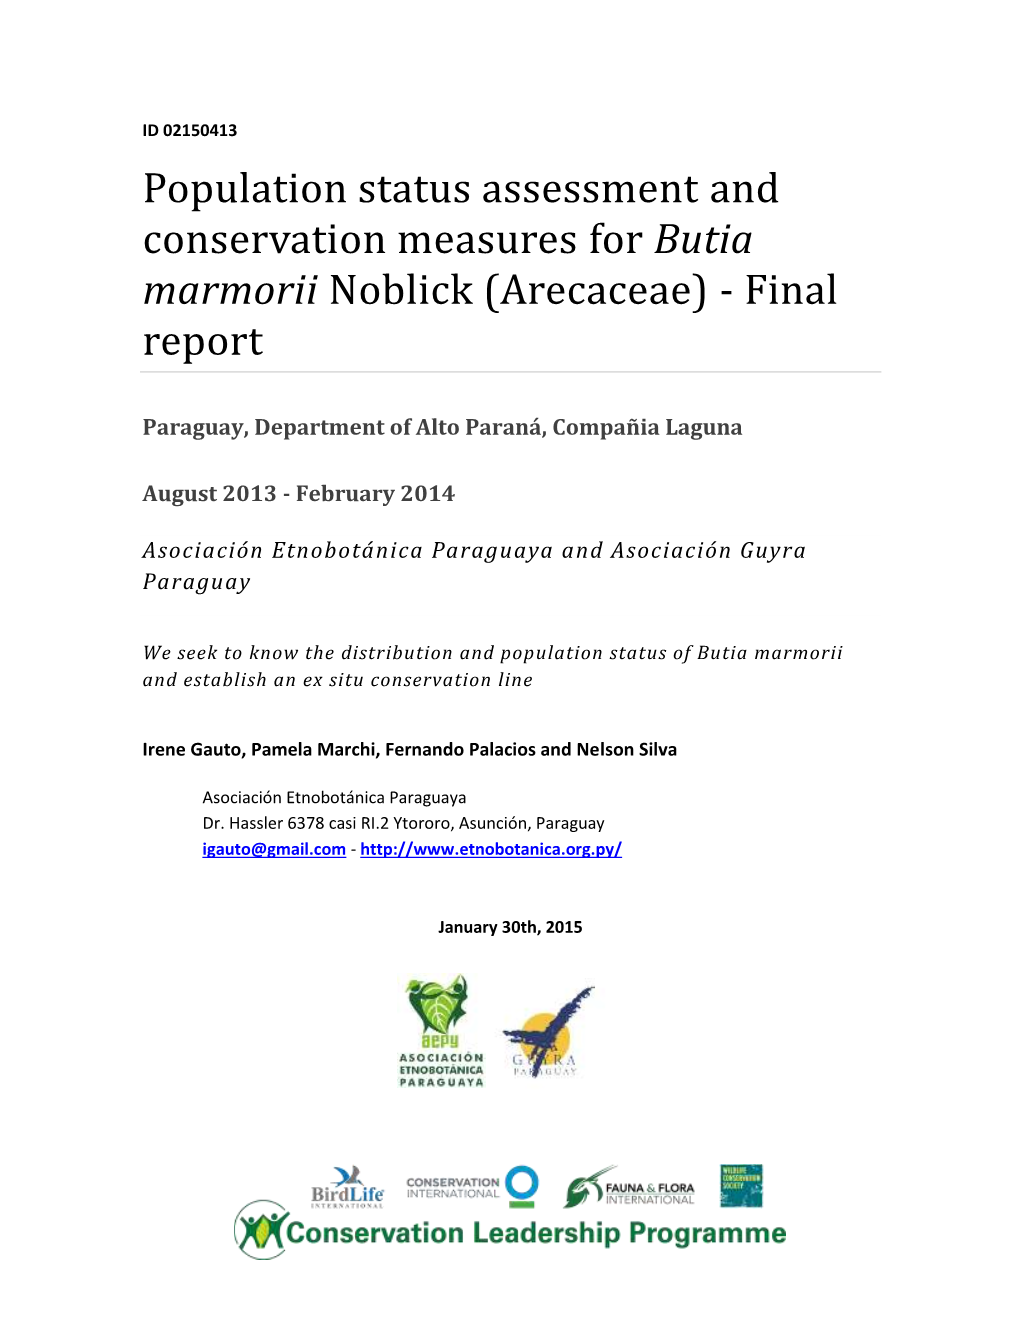 Population Status Assessment and Conservation Measures for Butia Marmorii Noblick (Arecaceae) - Final Report